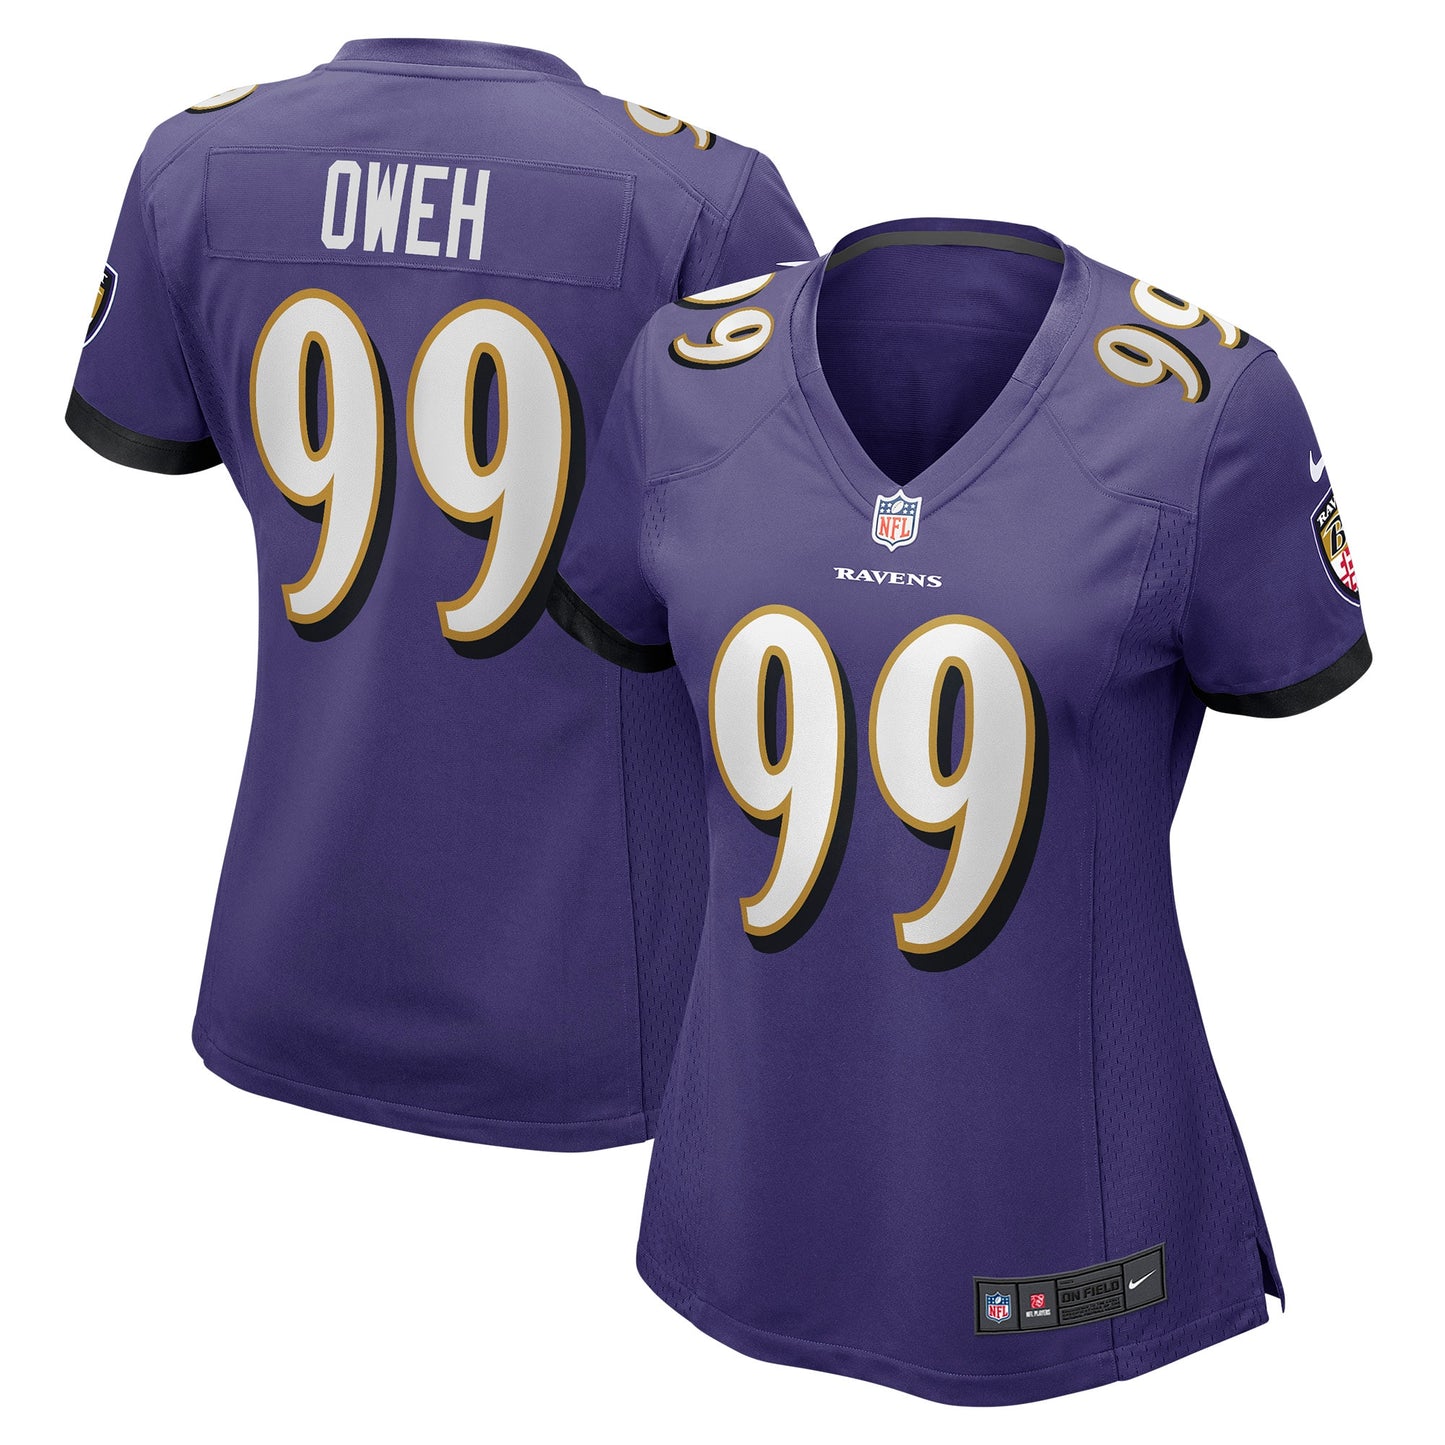 Odafe Oweh Baltimore Ravens Nike Women's Game Jersey - Purple